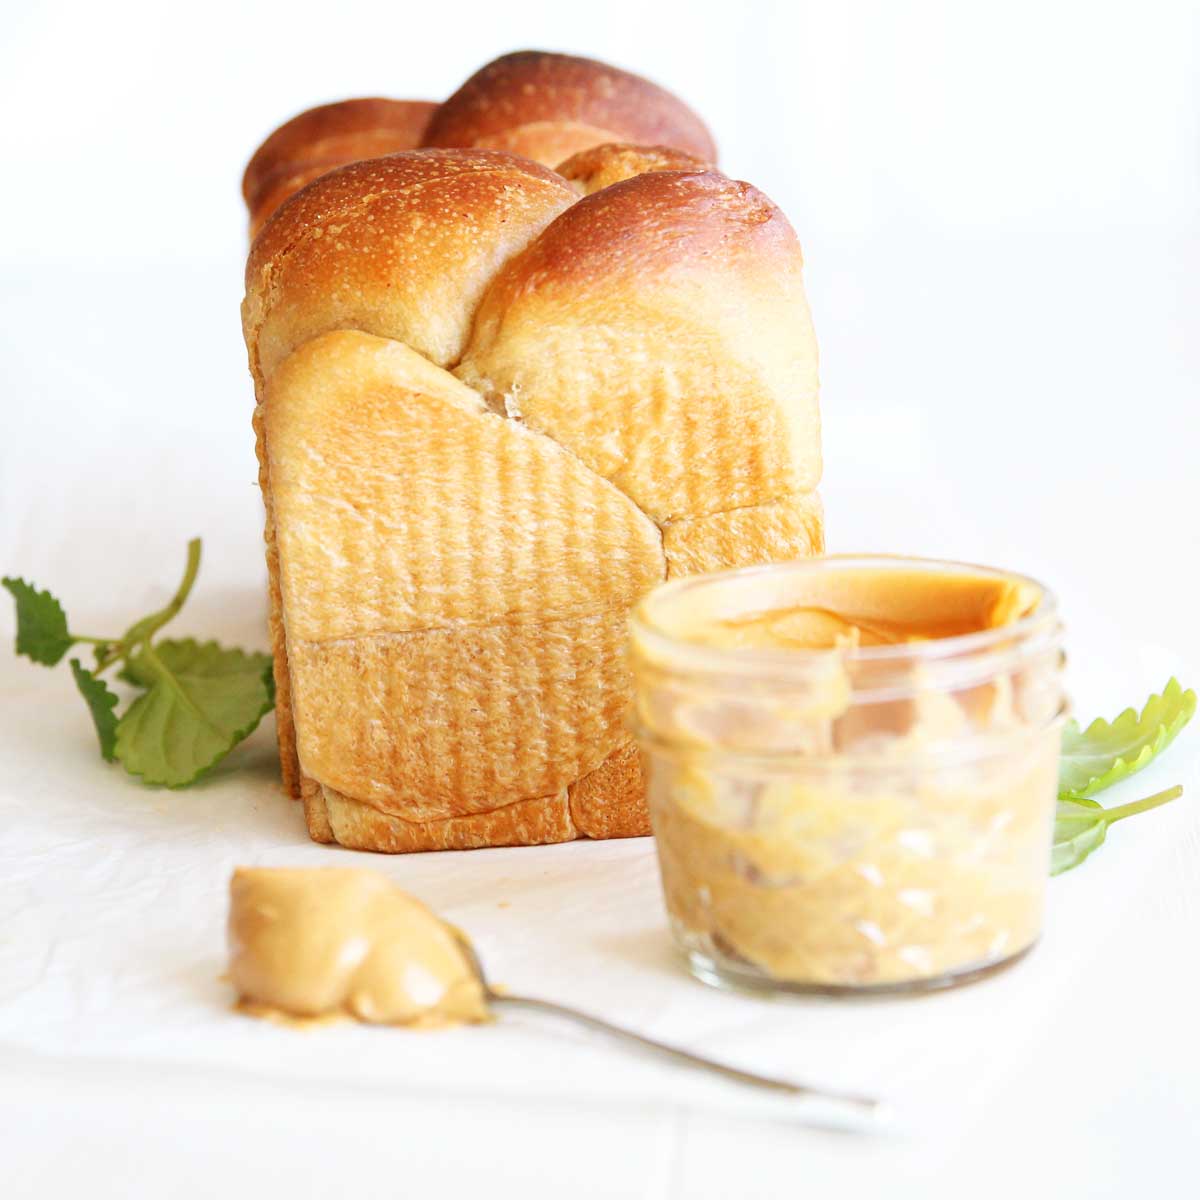 Peanut Butter Yeast Bread (A Healthier Vegan "Brioche" Recipe) - Ricotta Cinnamon Rolls